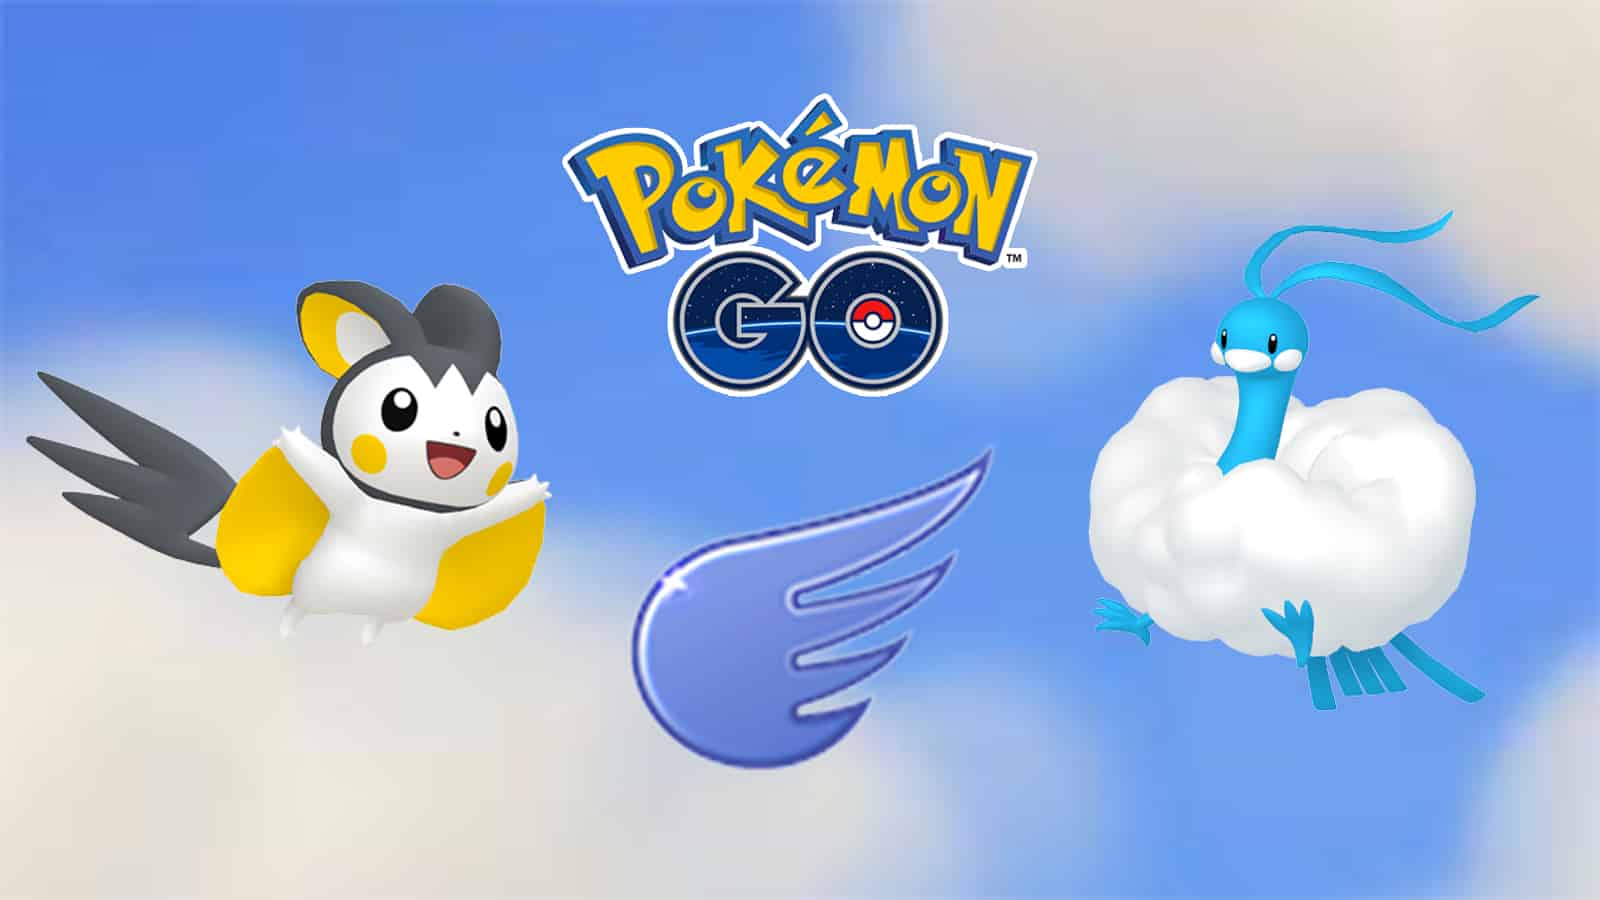 How to redeem Prime Gaming rewards for Pokémon Go - Gamepur